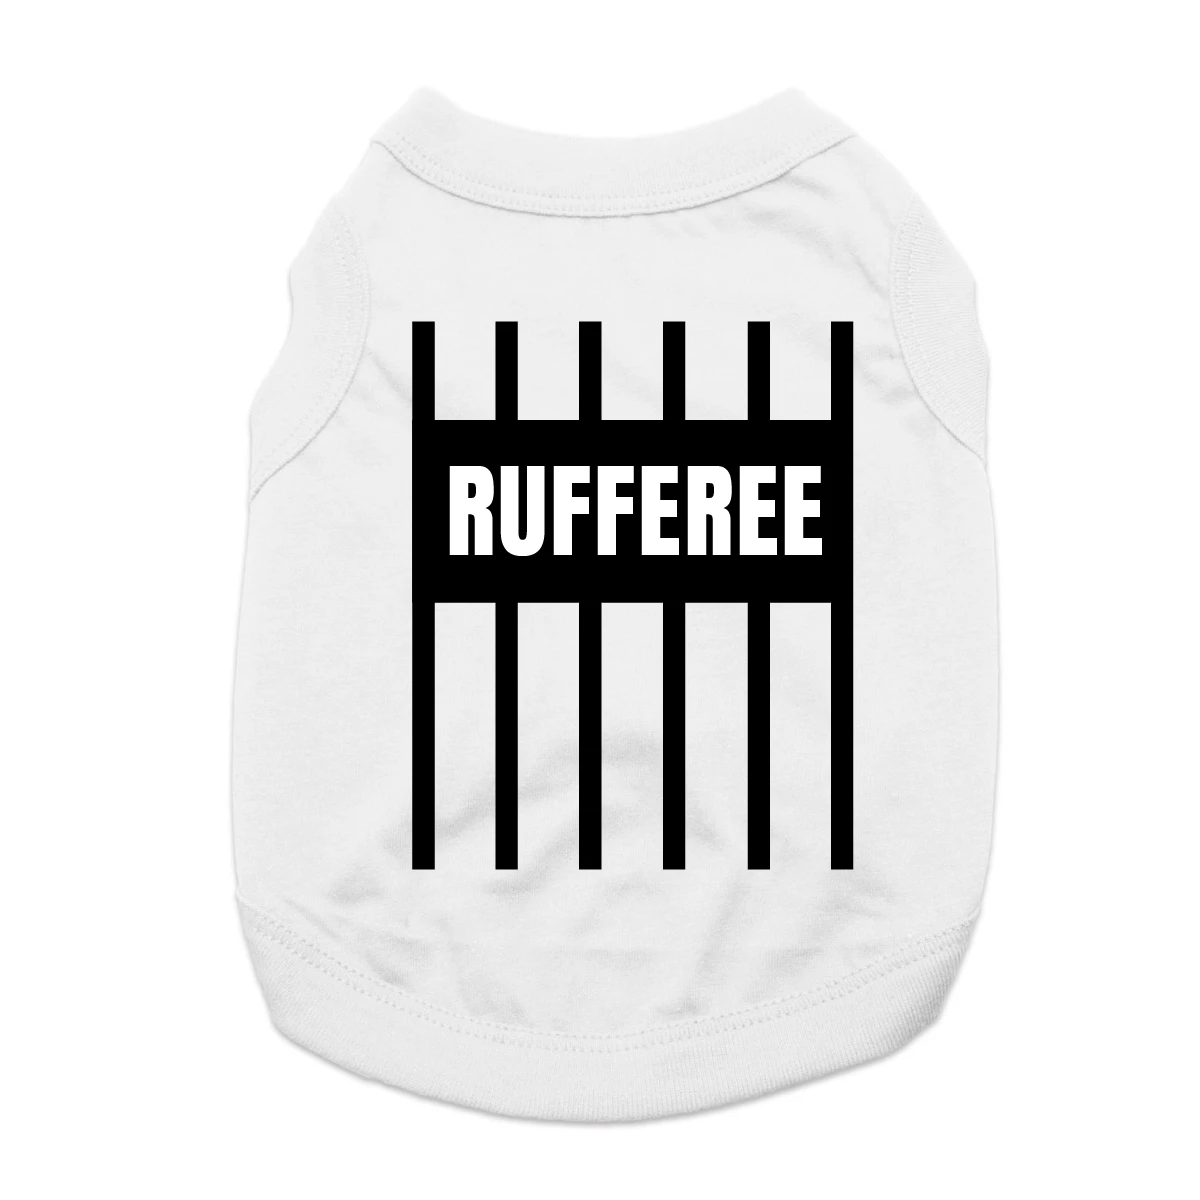 Rufferee Dog Shirt - White